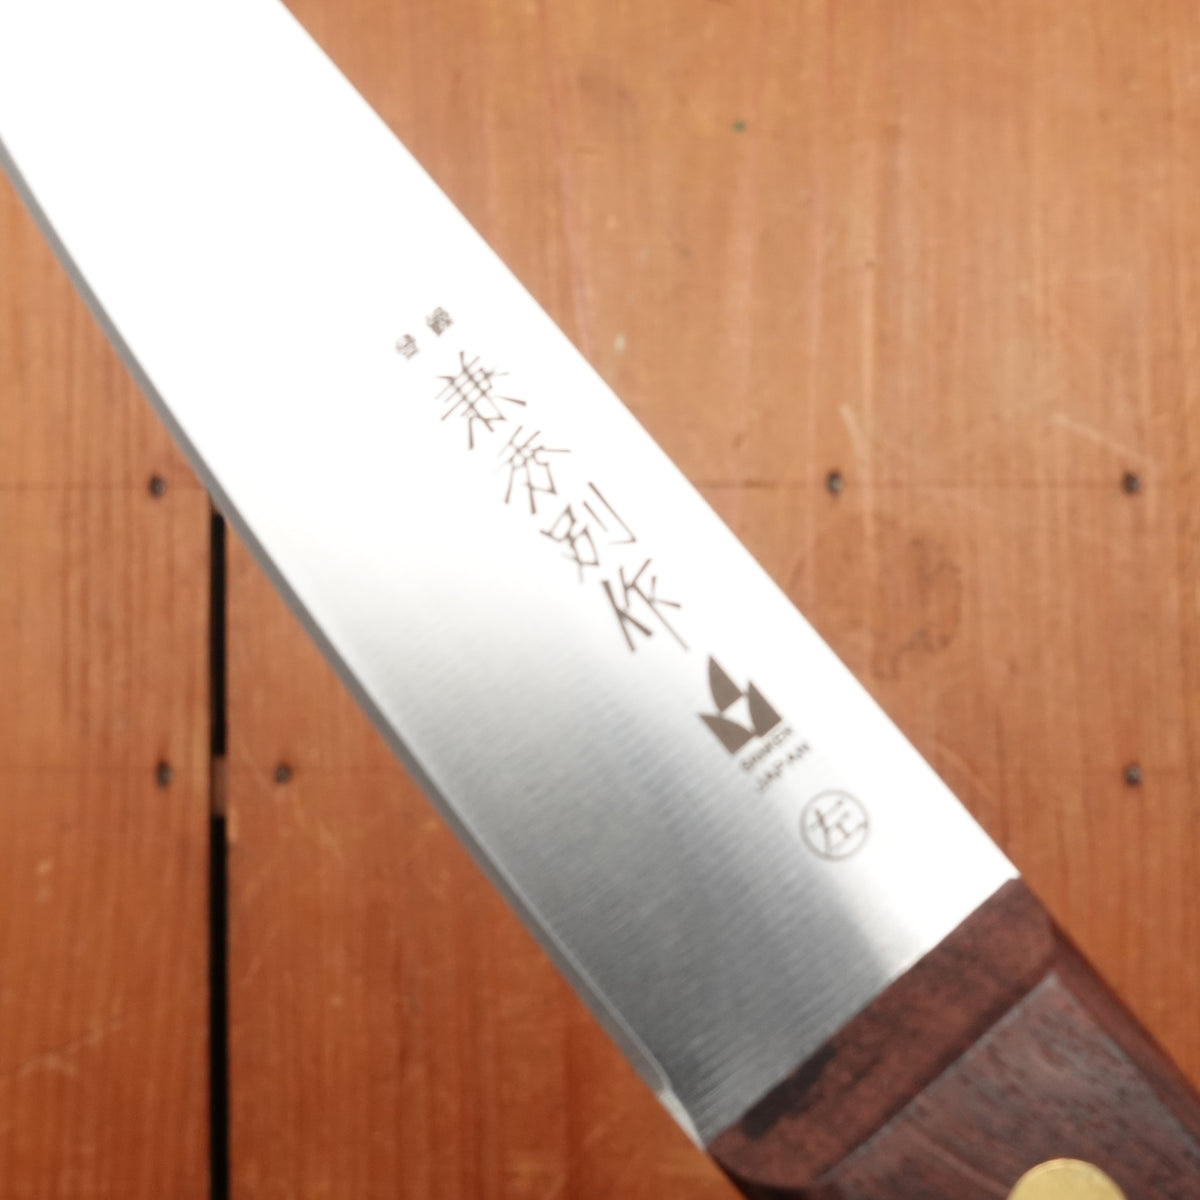 Kanehide 150mm Honesuki Maru Semi Stainless Japanese Butcher Knife - LEFTY